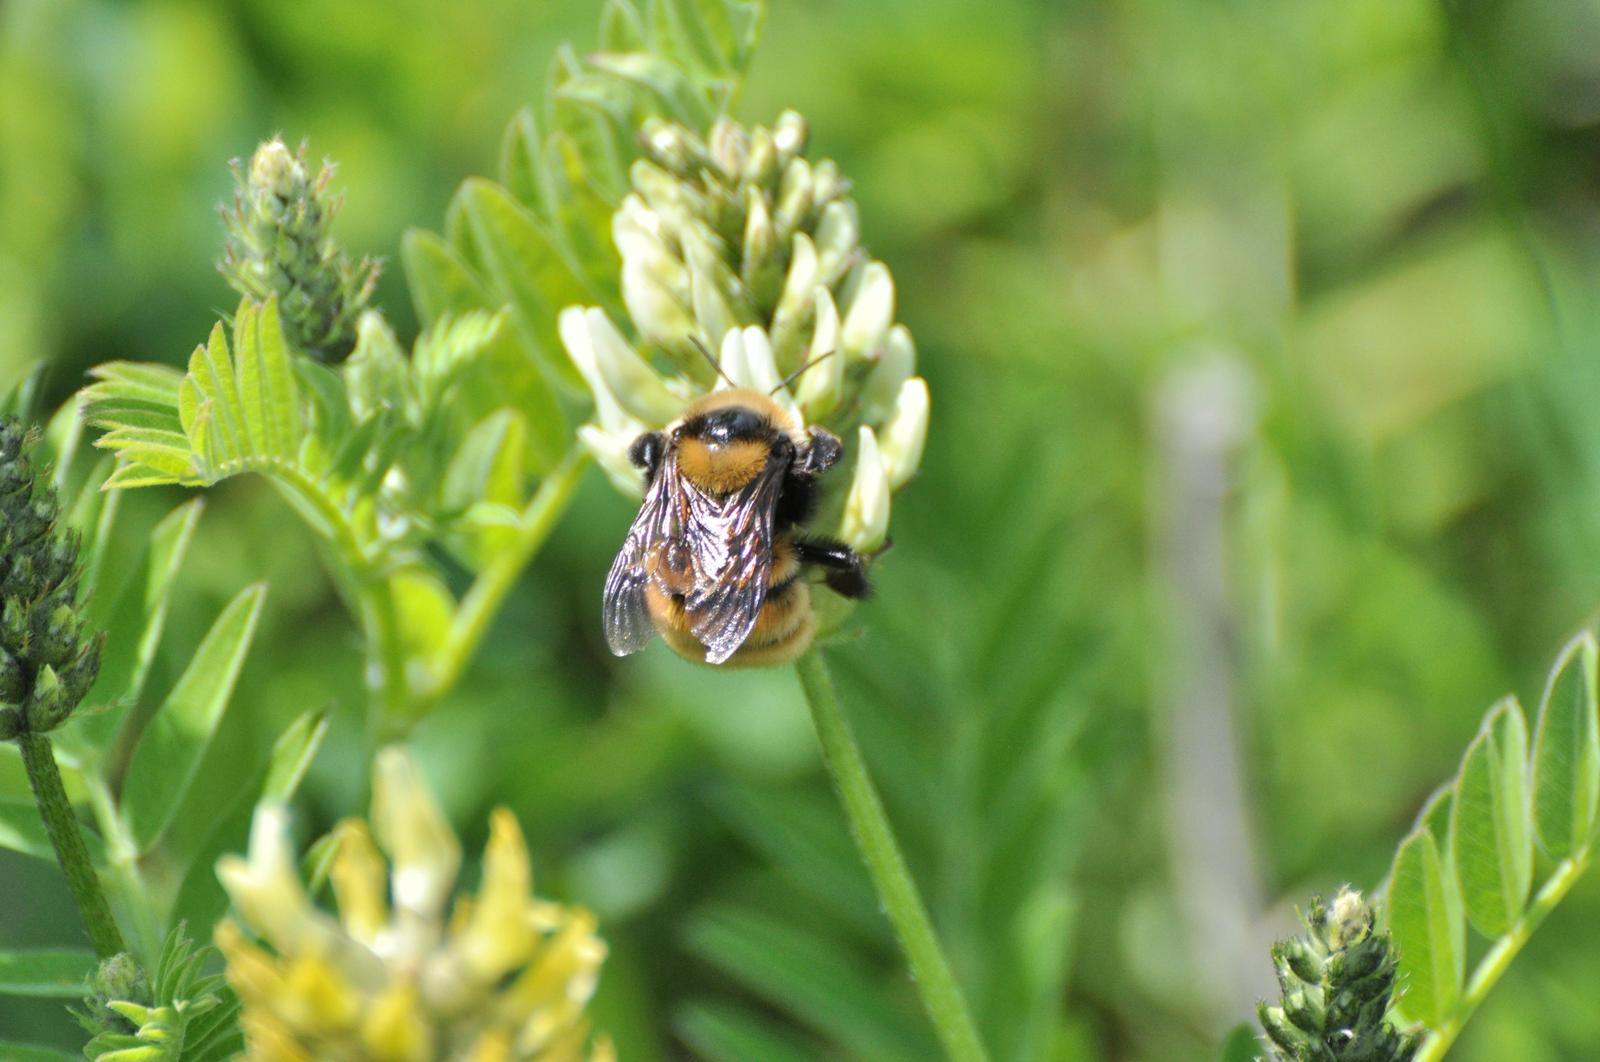 Northern amber bumble bee Photo by Sarah Johnson